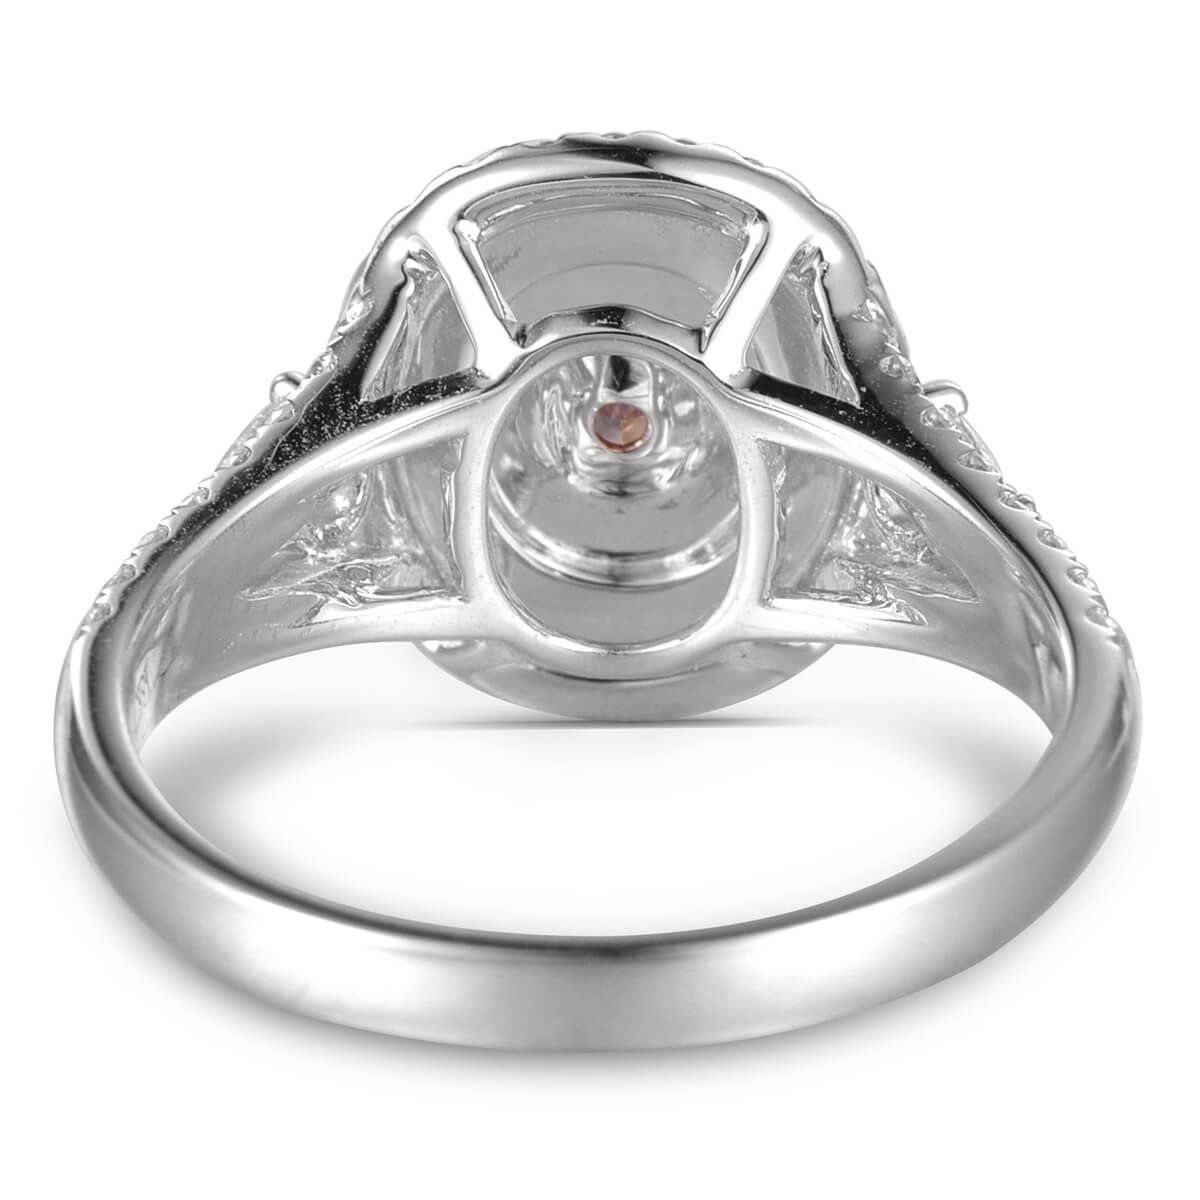 Fancy Pink Purple Diamond Ring, 0.23 Ct. (1.03 Ct. TW), Cushion shape, GIA Certified, 2185417495